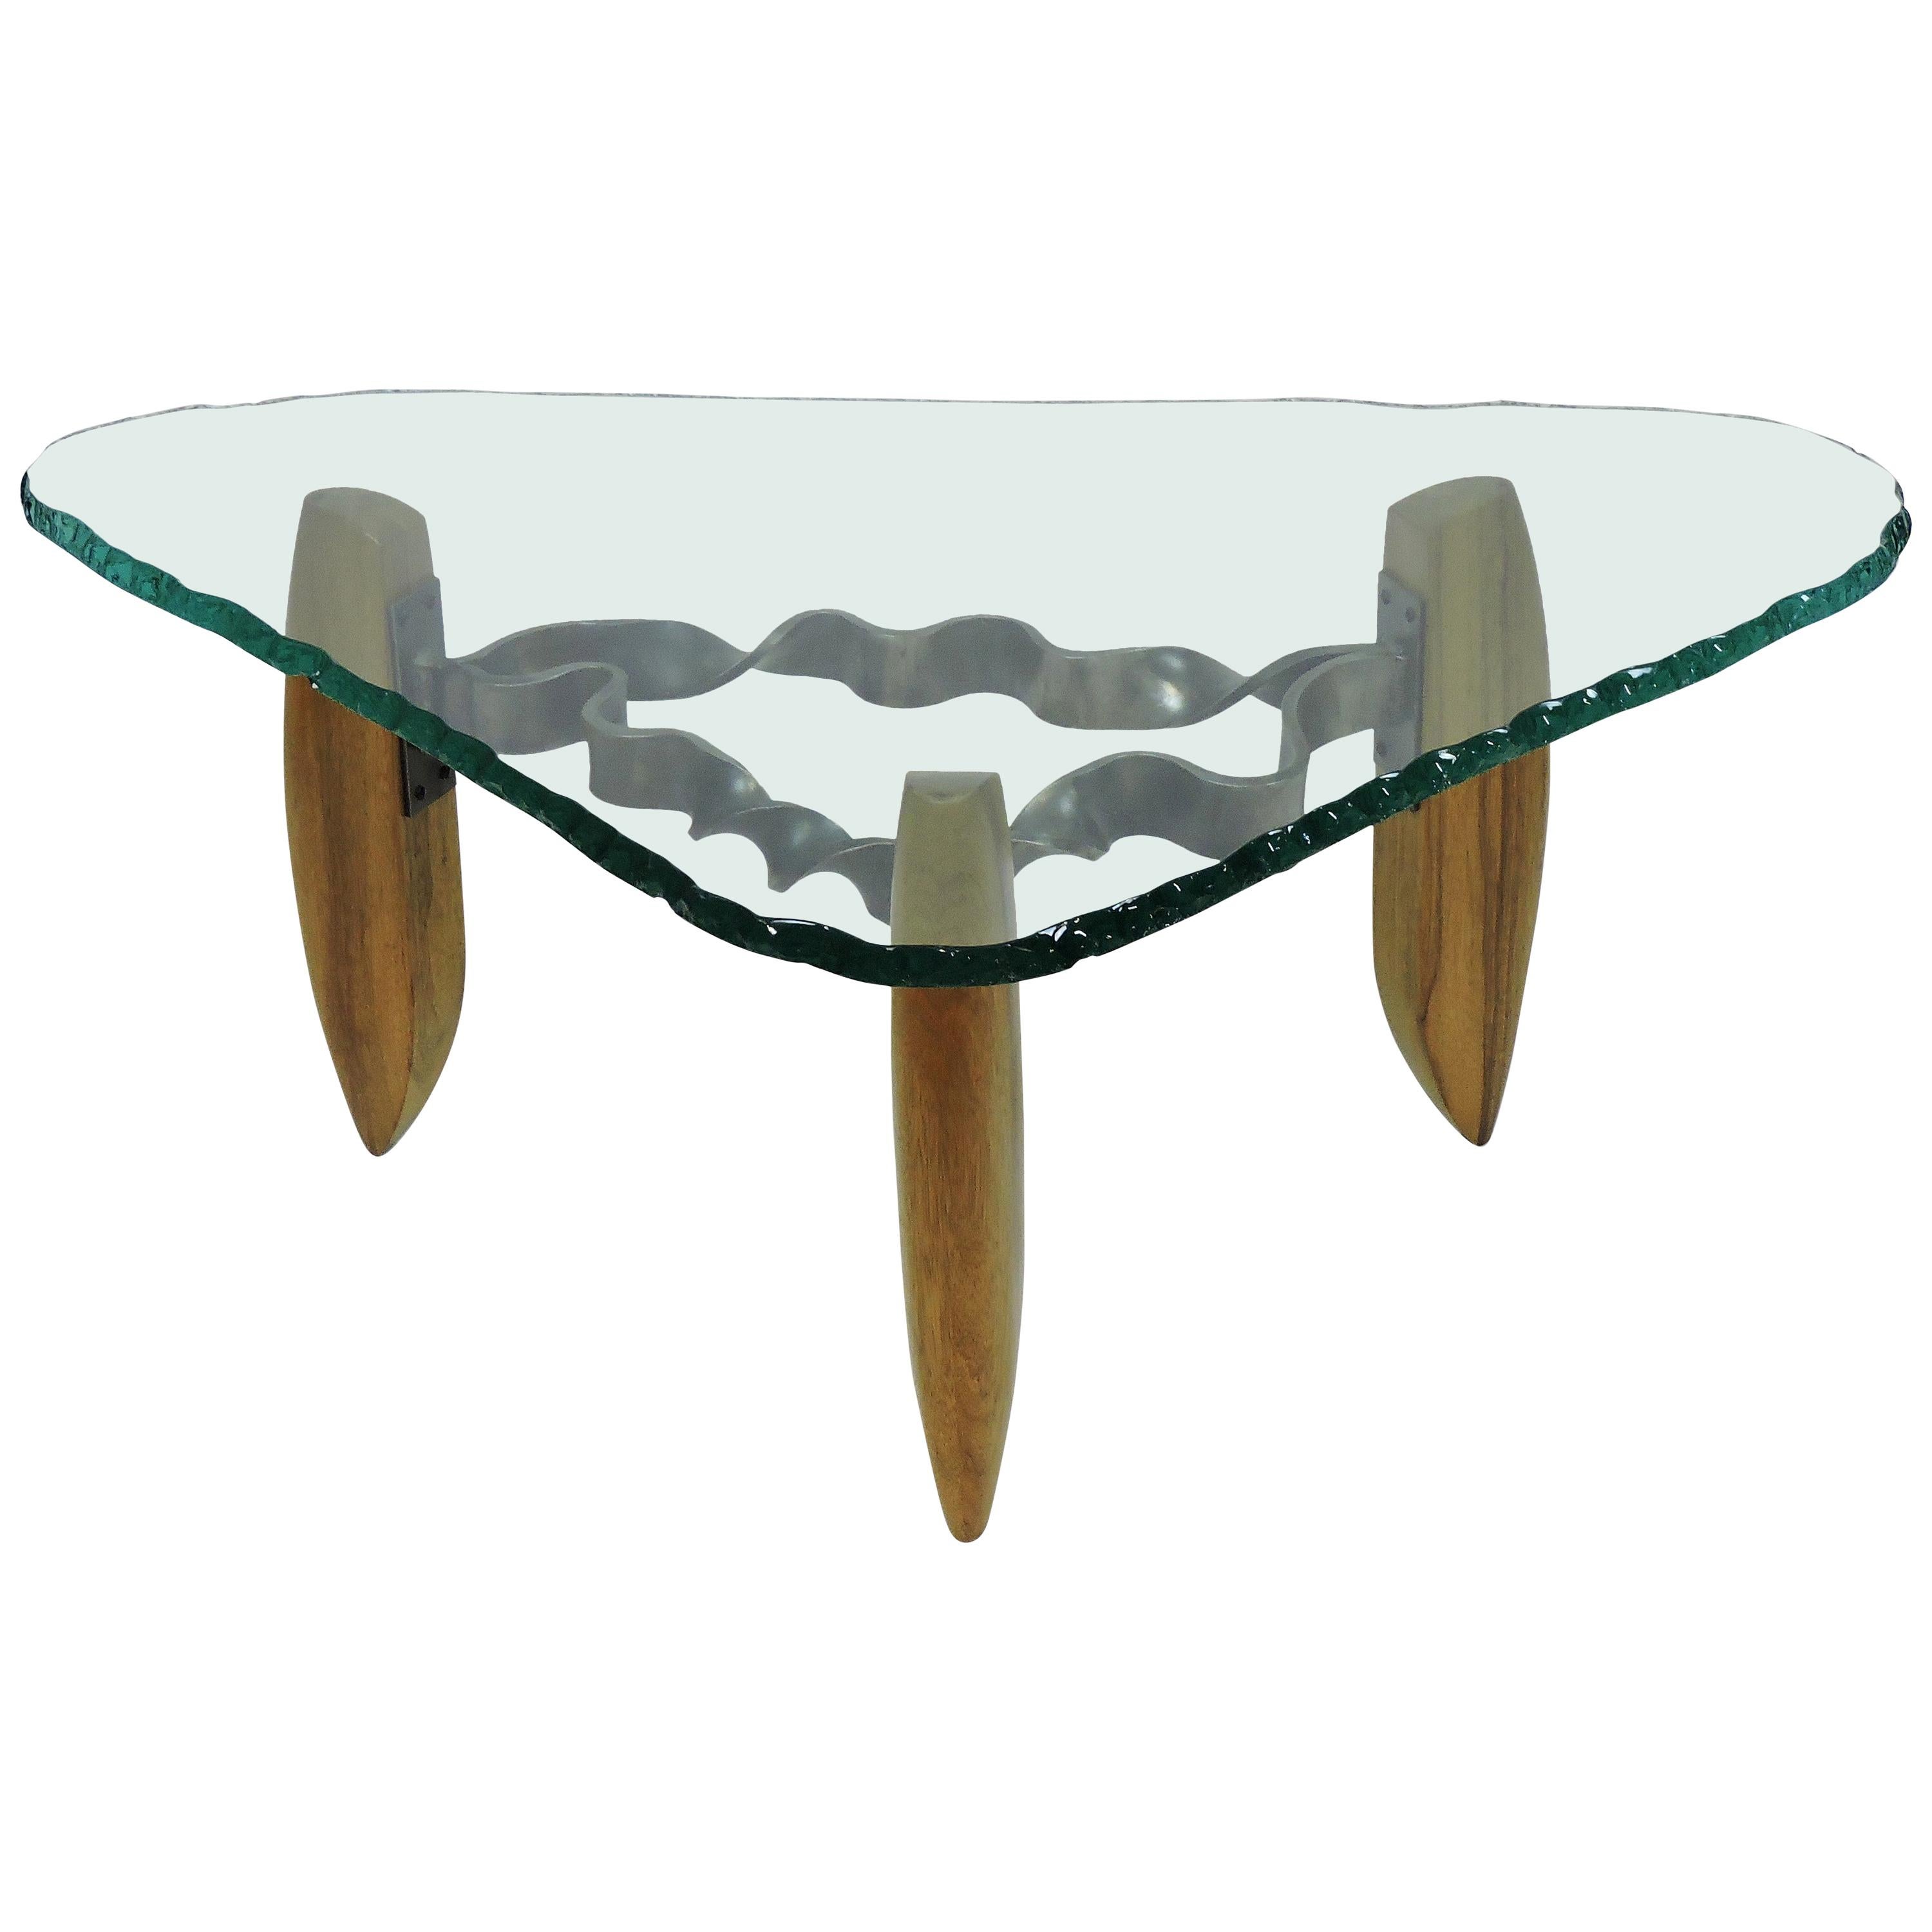 American Studio Silas Seandel Style Modernist Metal, Wood and Glass Coffee Table